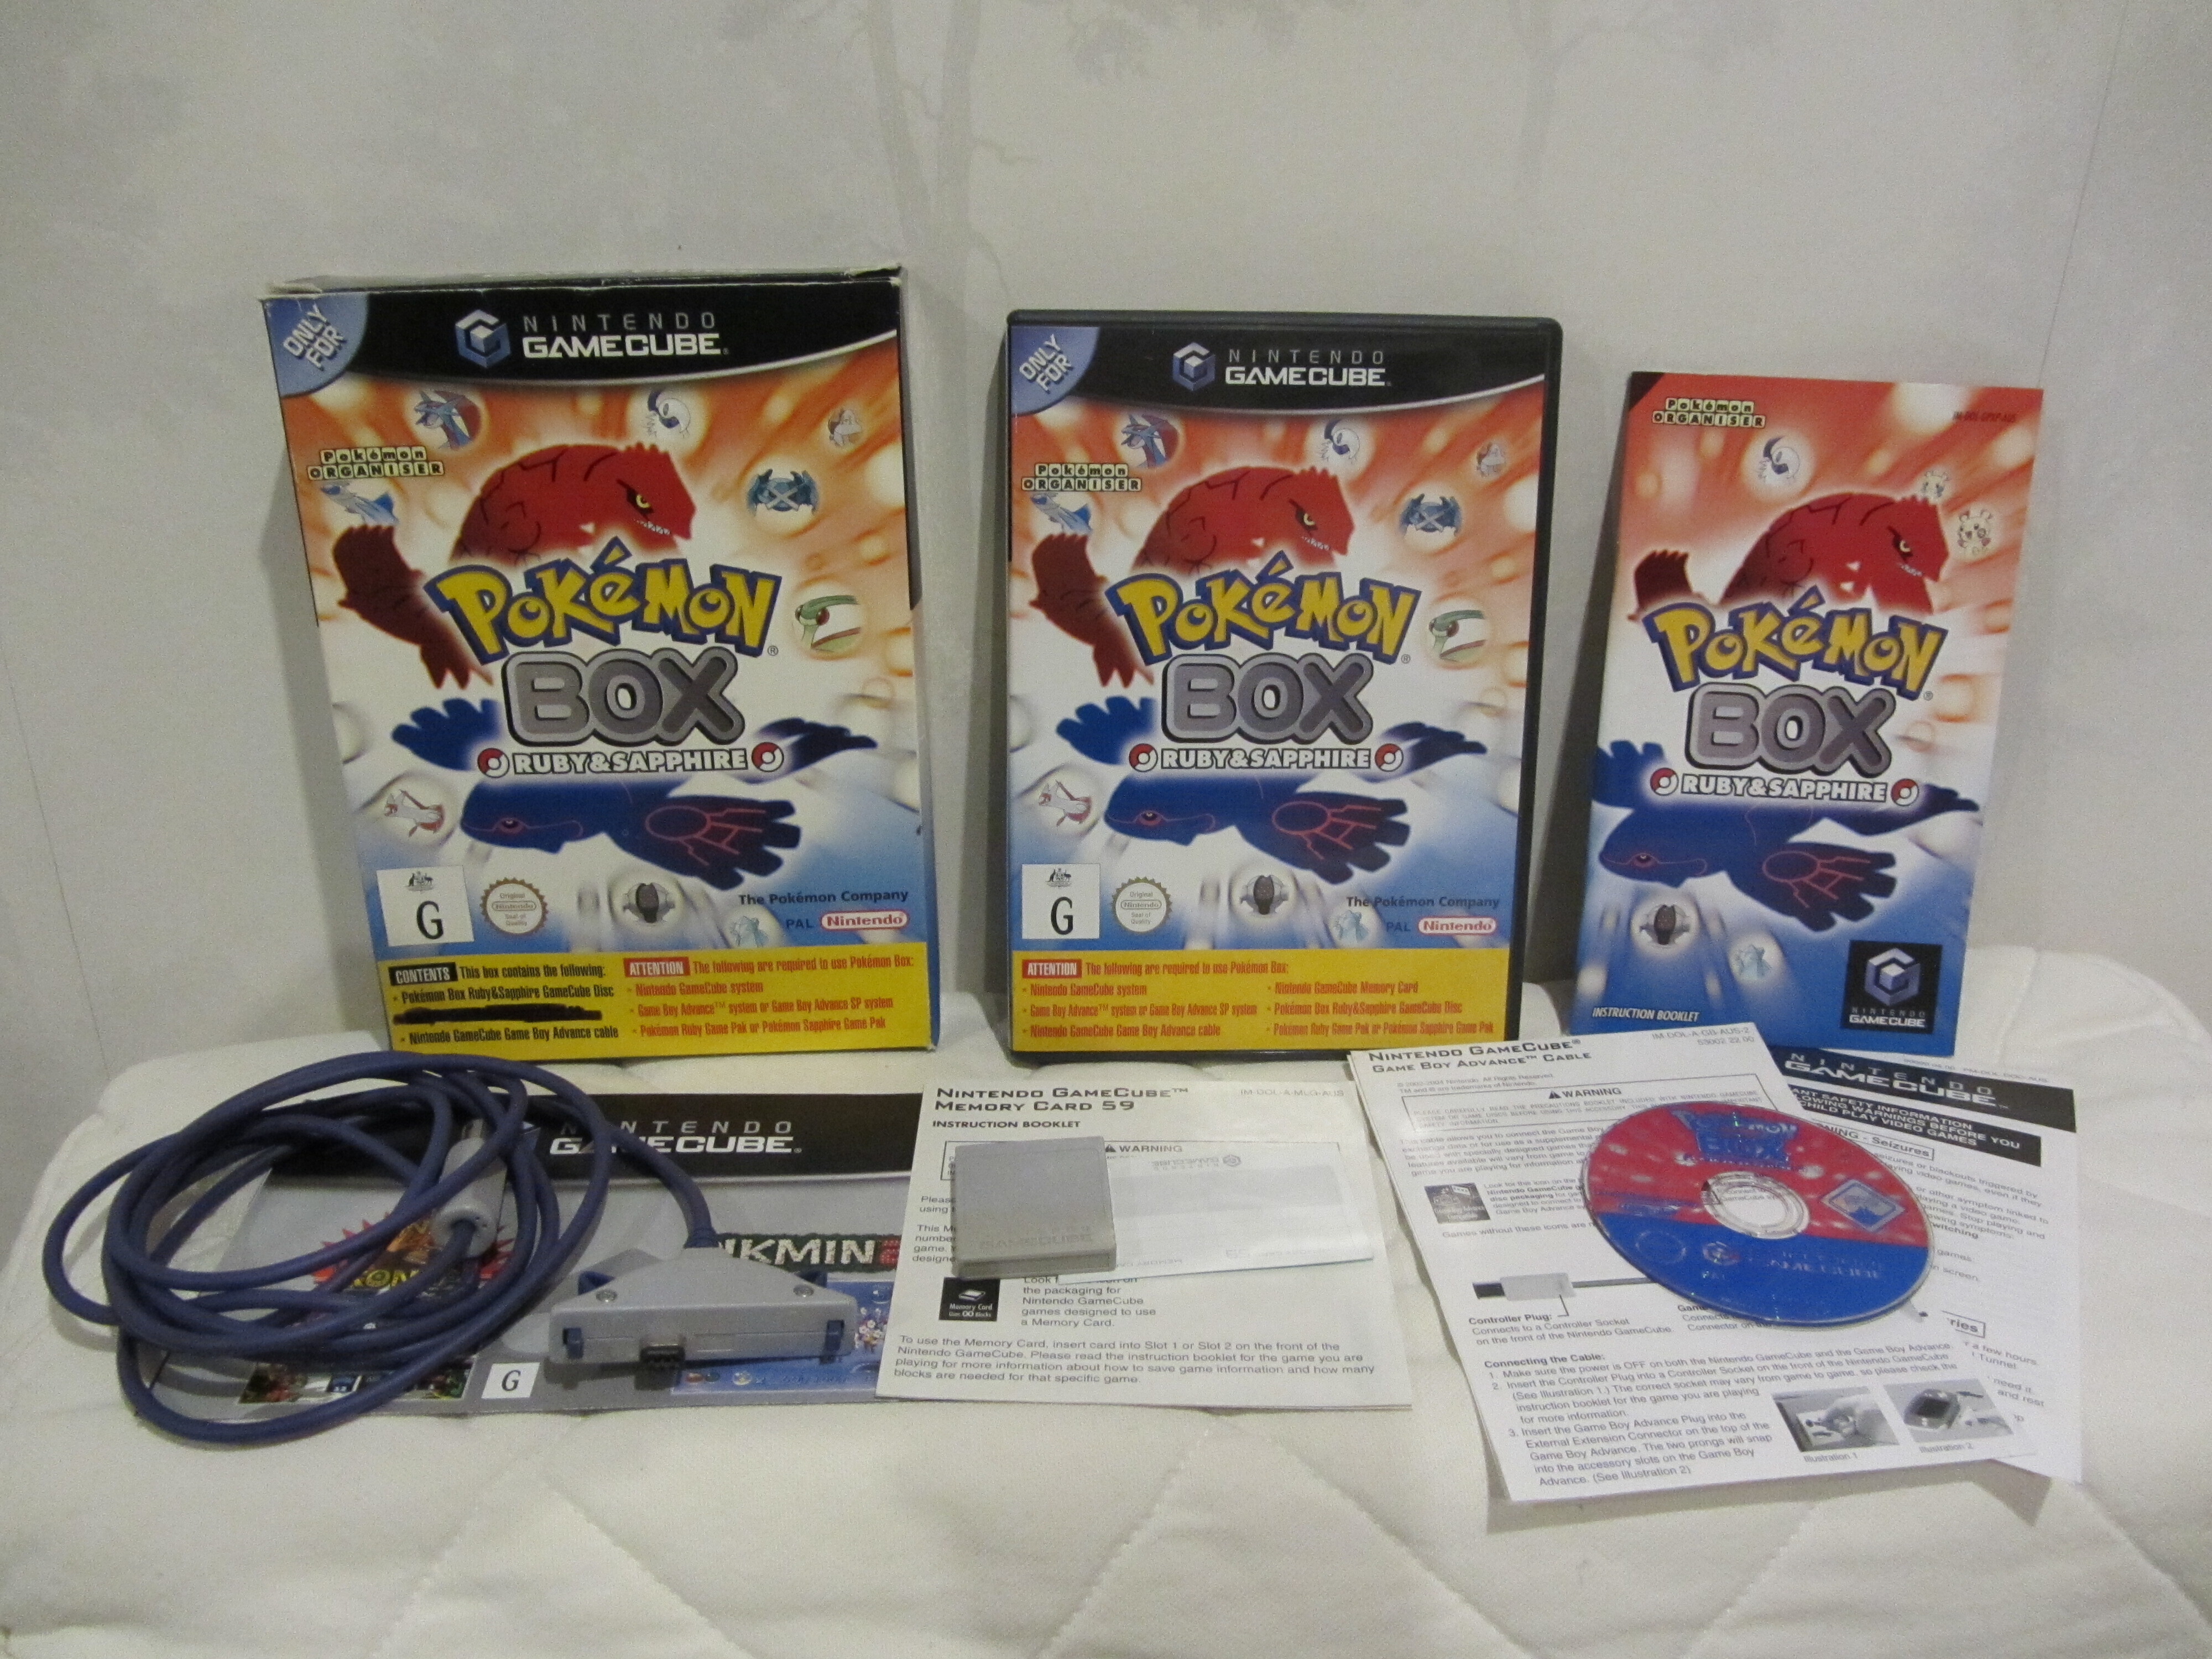  Nintendo GameCube Pokemon Box Bundle